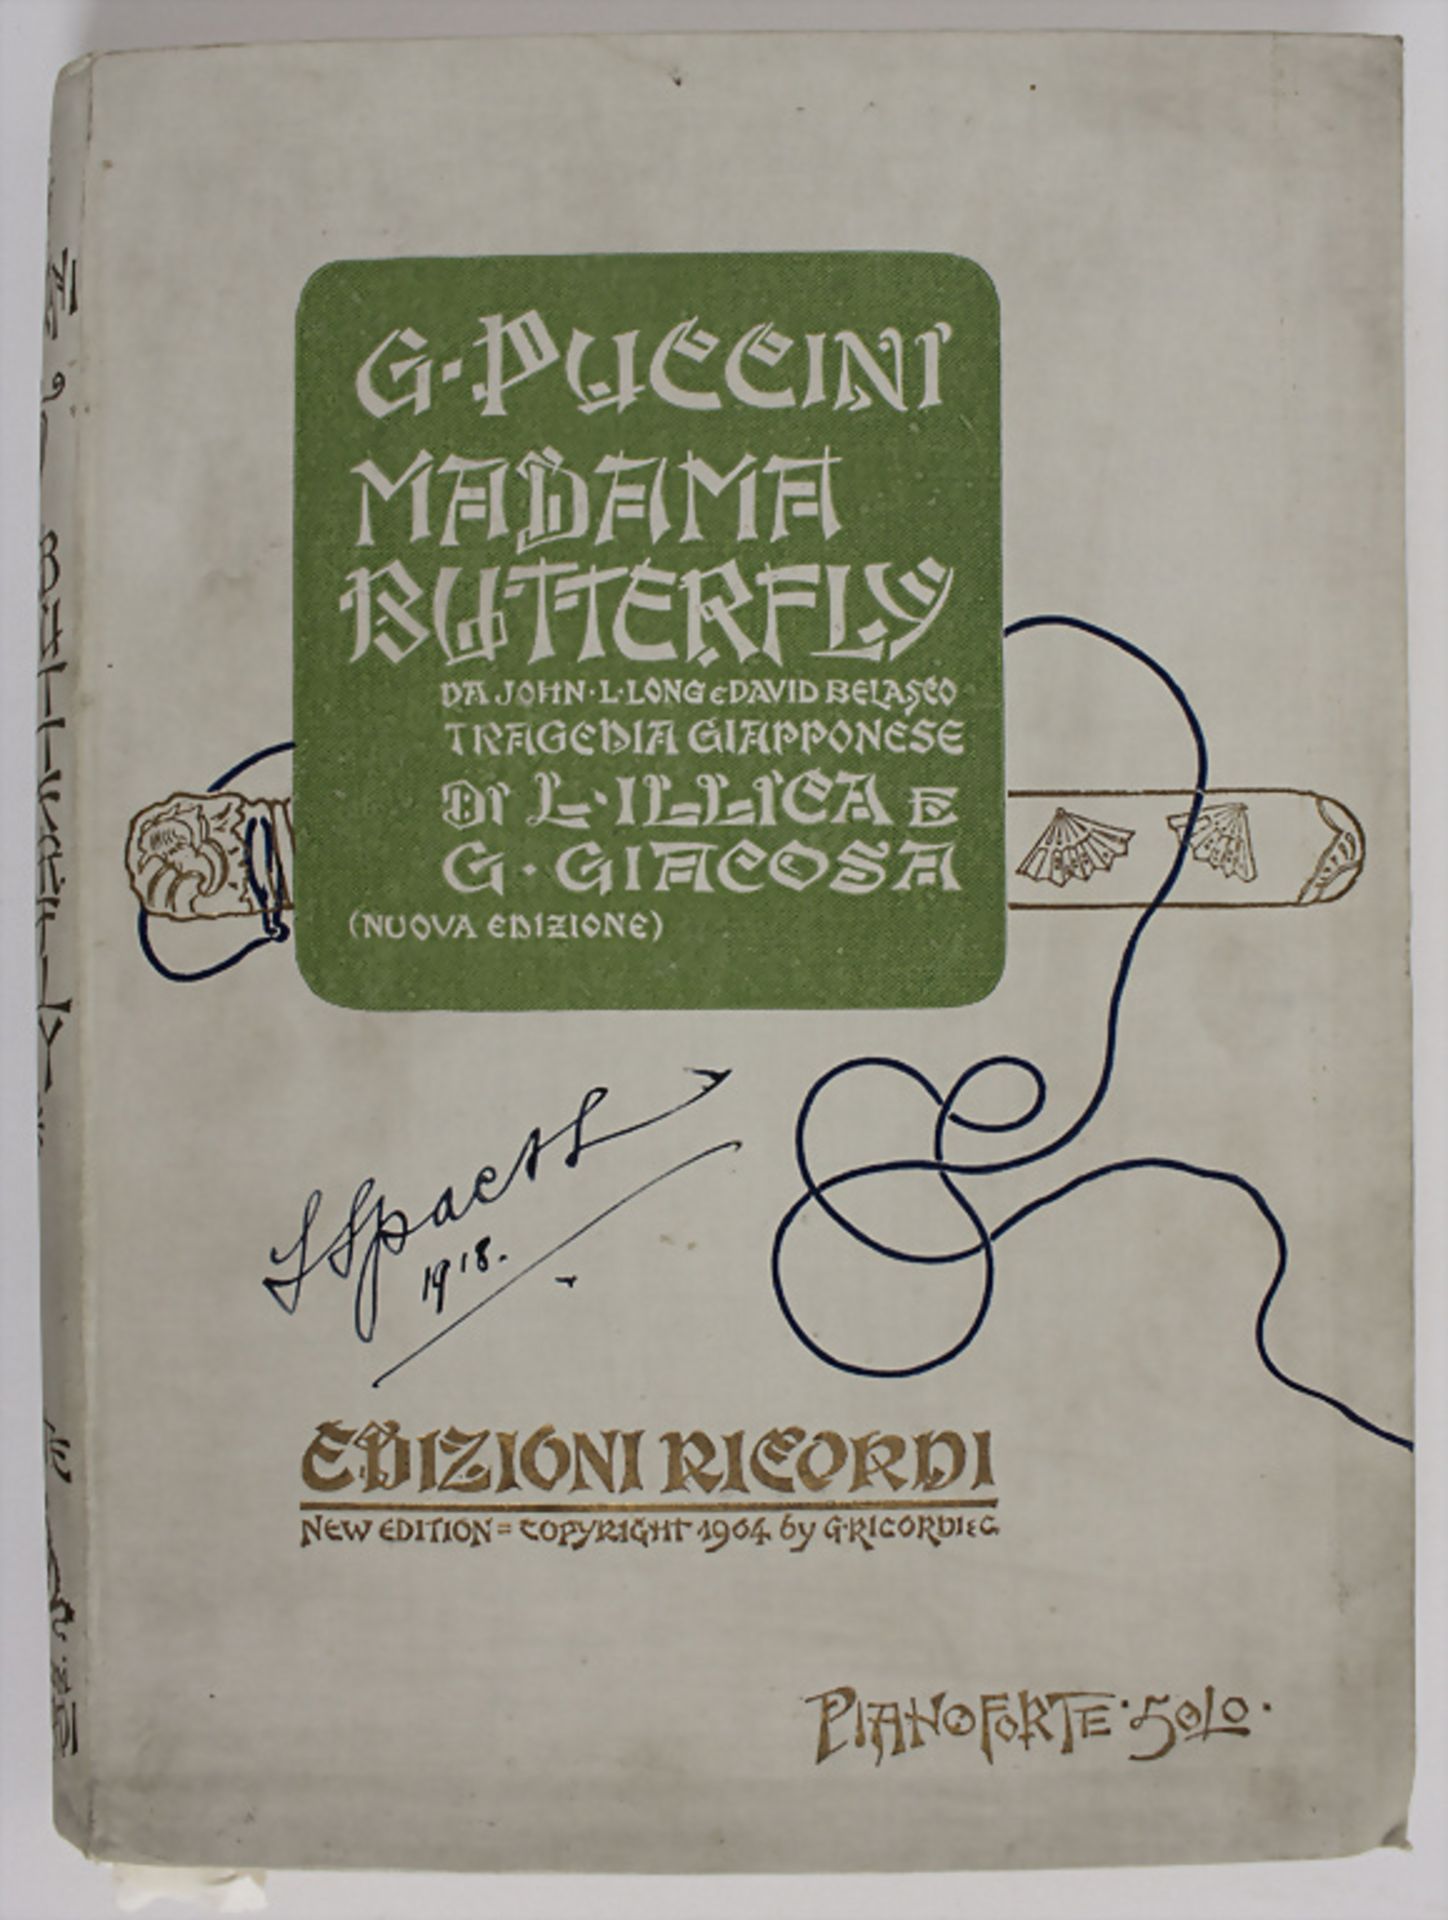 Madama Butterfly, Giacomo Puccini, Milano, 1904